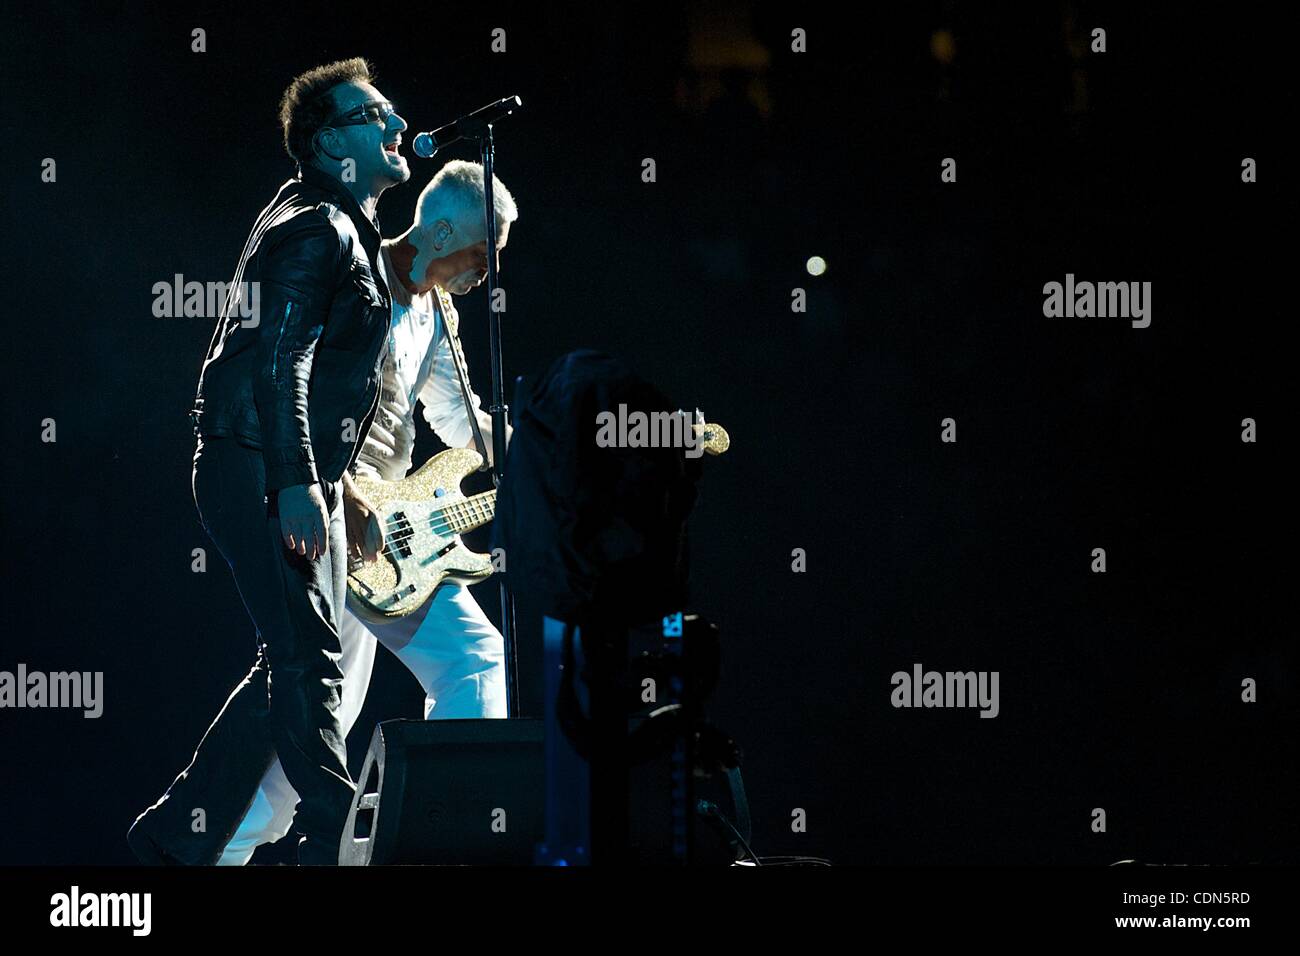 Sept 30, 2010 - Sevilla, Andalucia, Spain - The Irish rock band U2 performs on stage during the U2 360 Tour concert at the Estadio Olimpico. (Credit Image: © Jack Abuin/ZUMAPRESS.com) Stock Photo